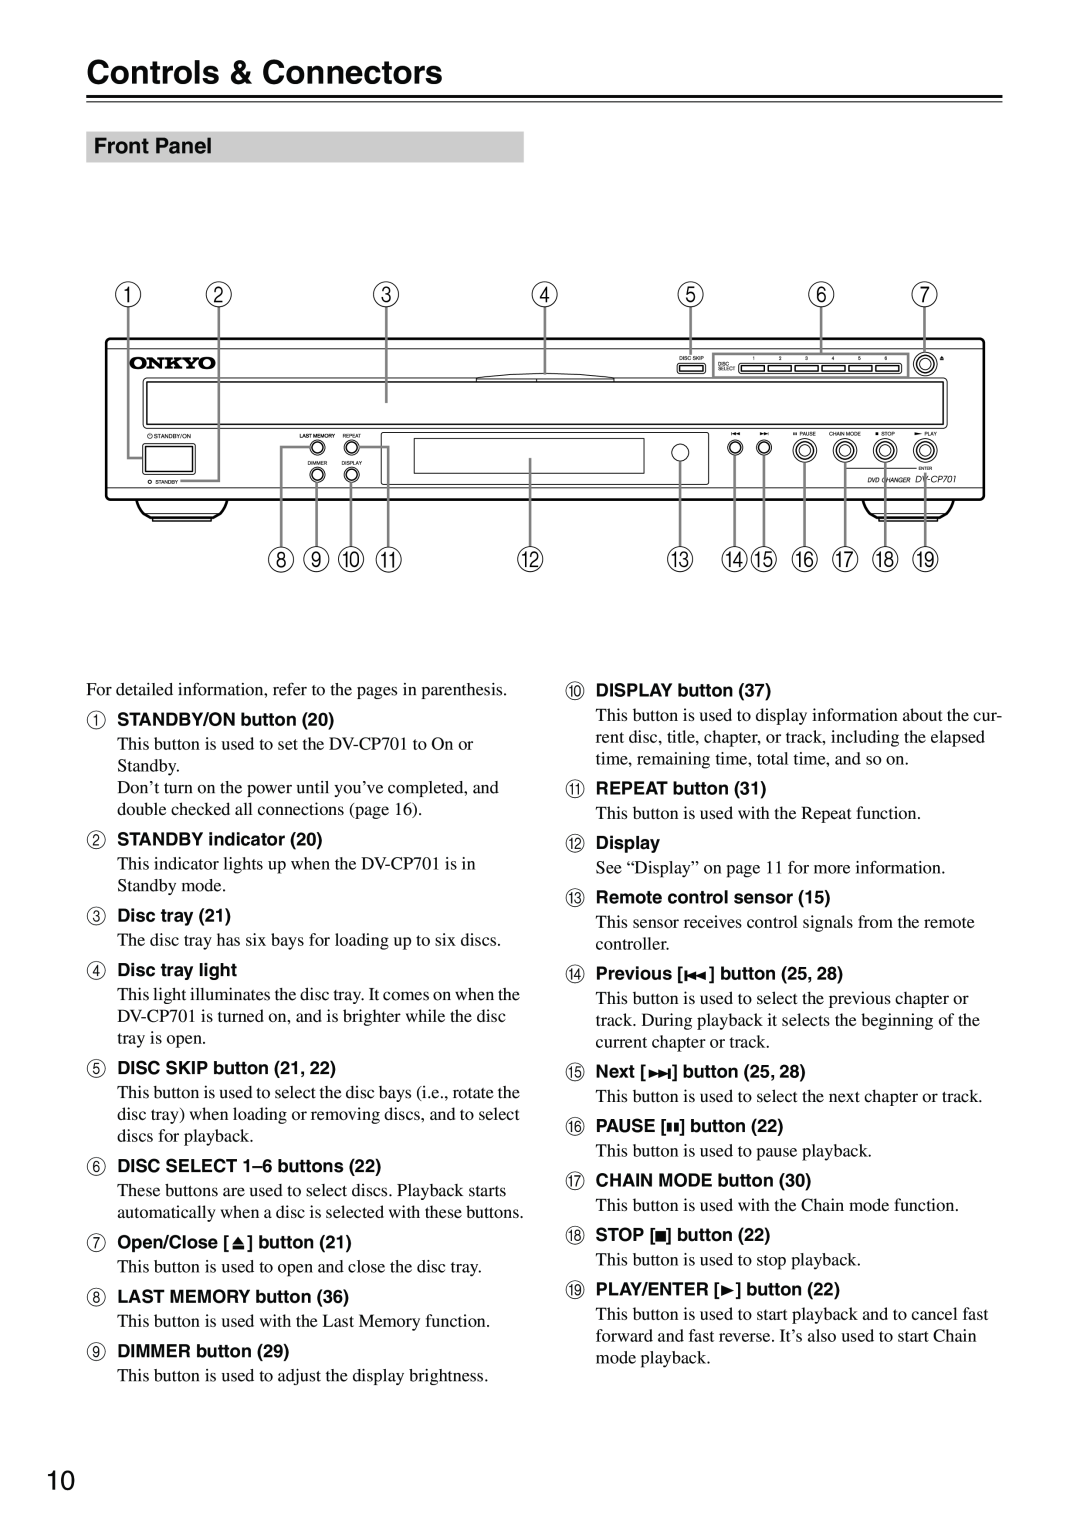 Onkyo DV-CP701 instruction manual Controls & Connectors 